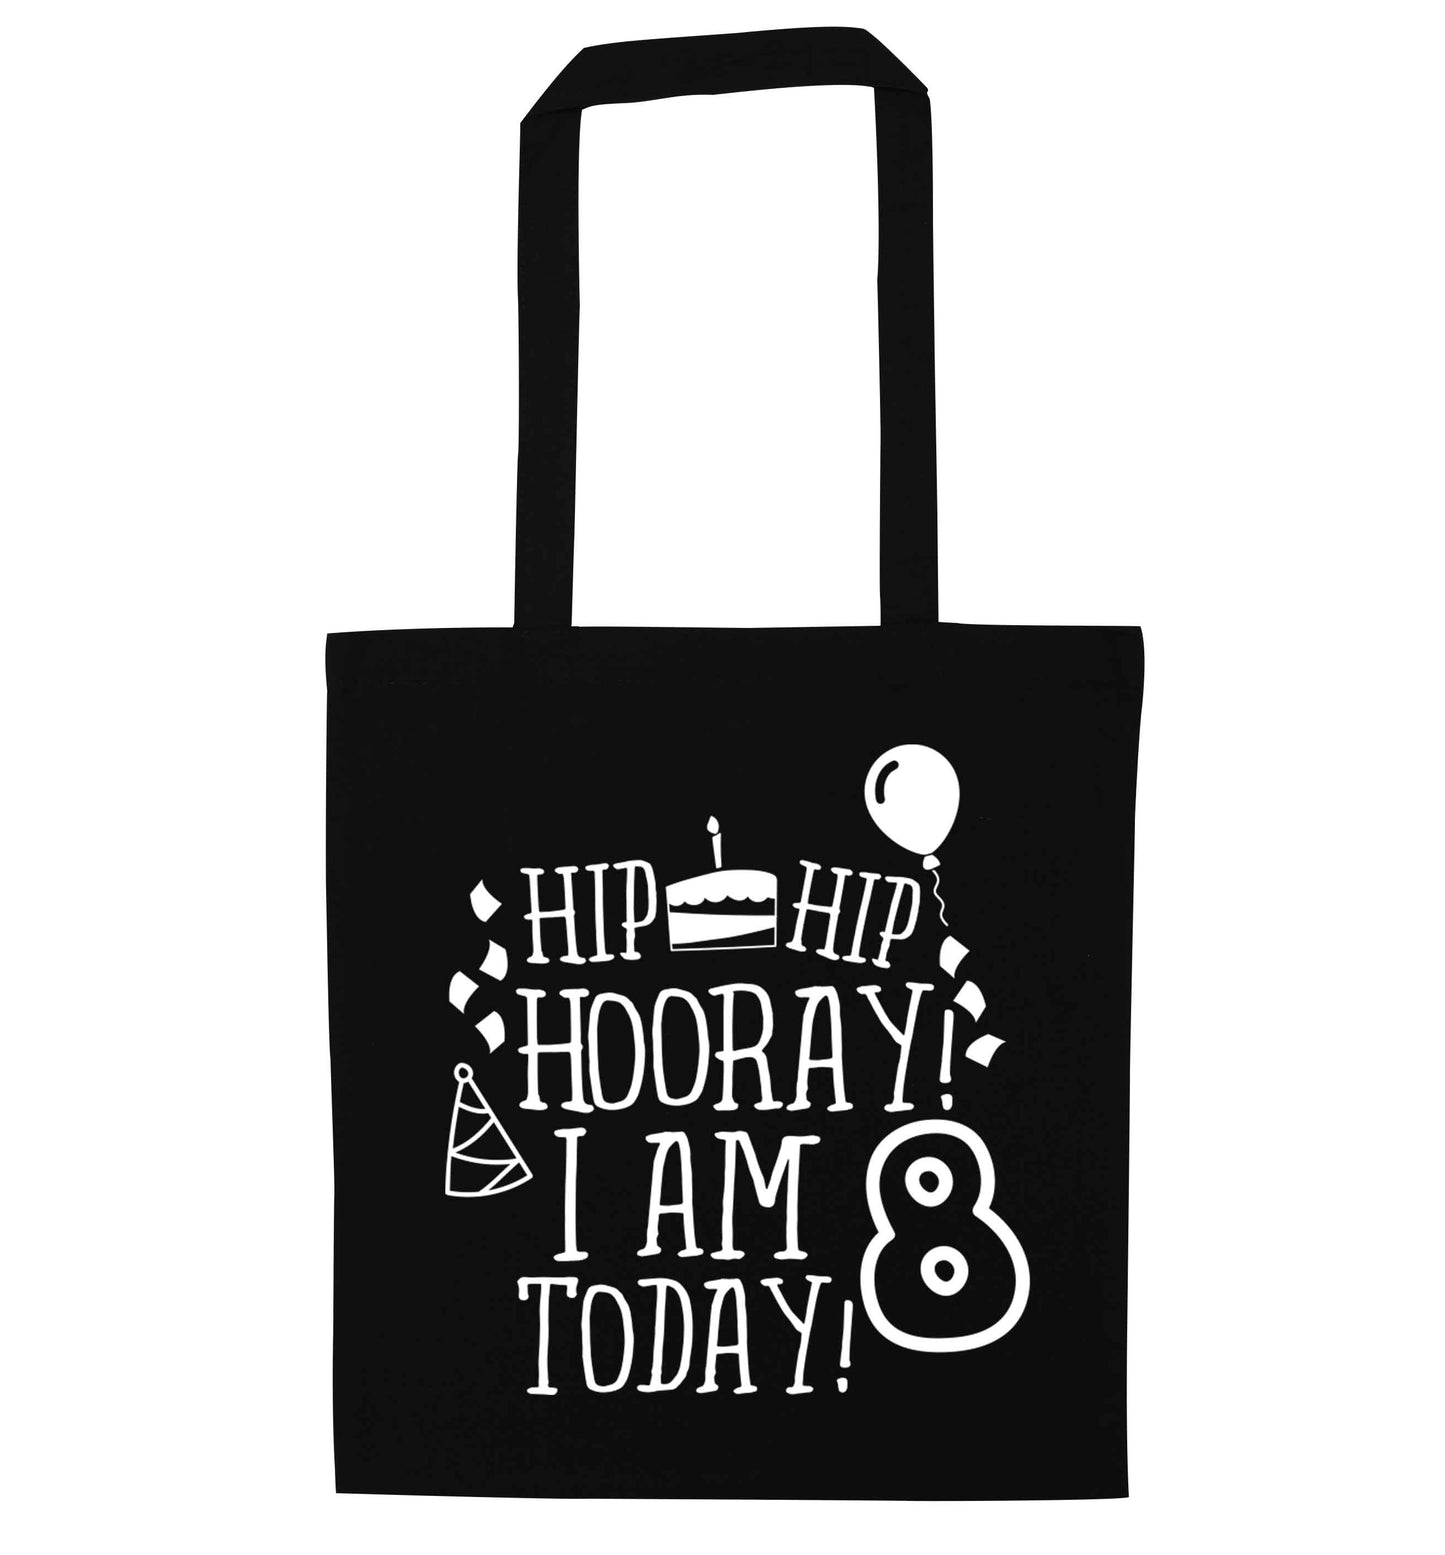 Hip hip hooray I am 8 today! black tote bag